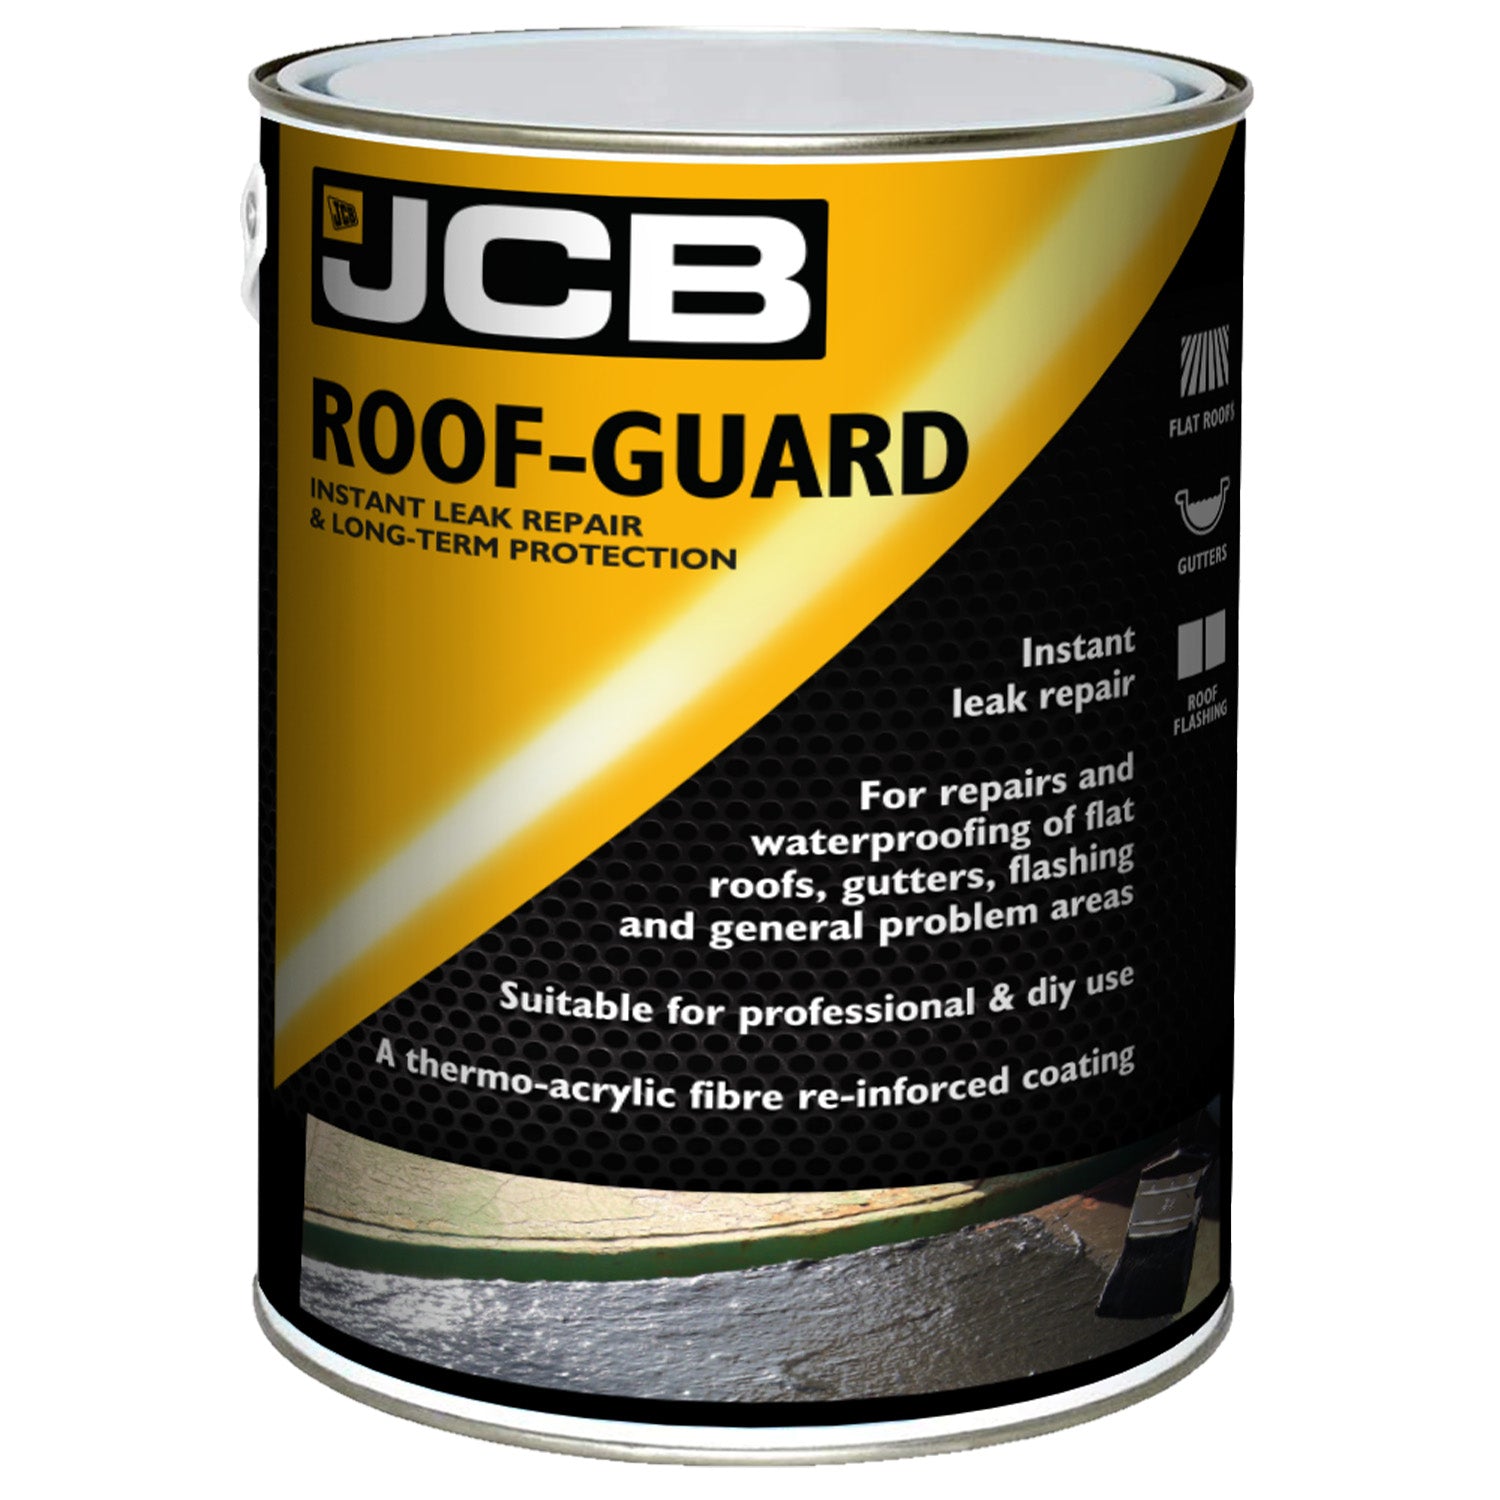 JCB Roof Guard 5kg